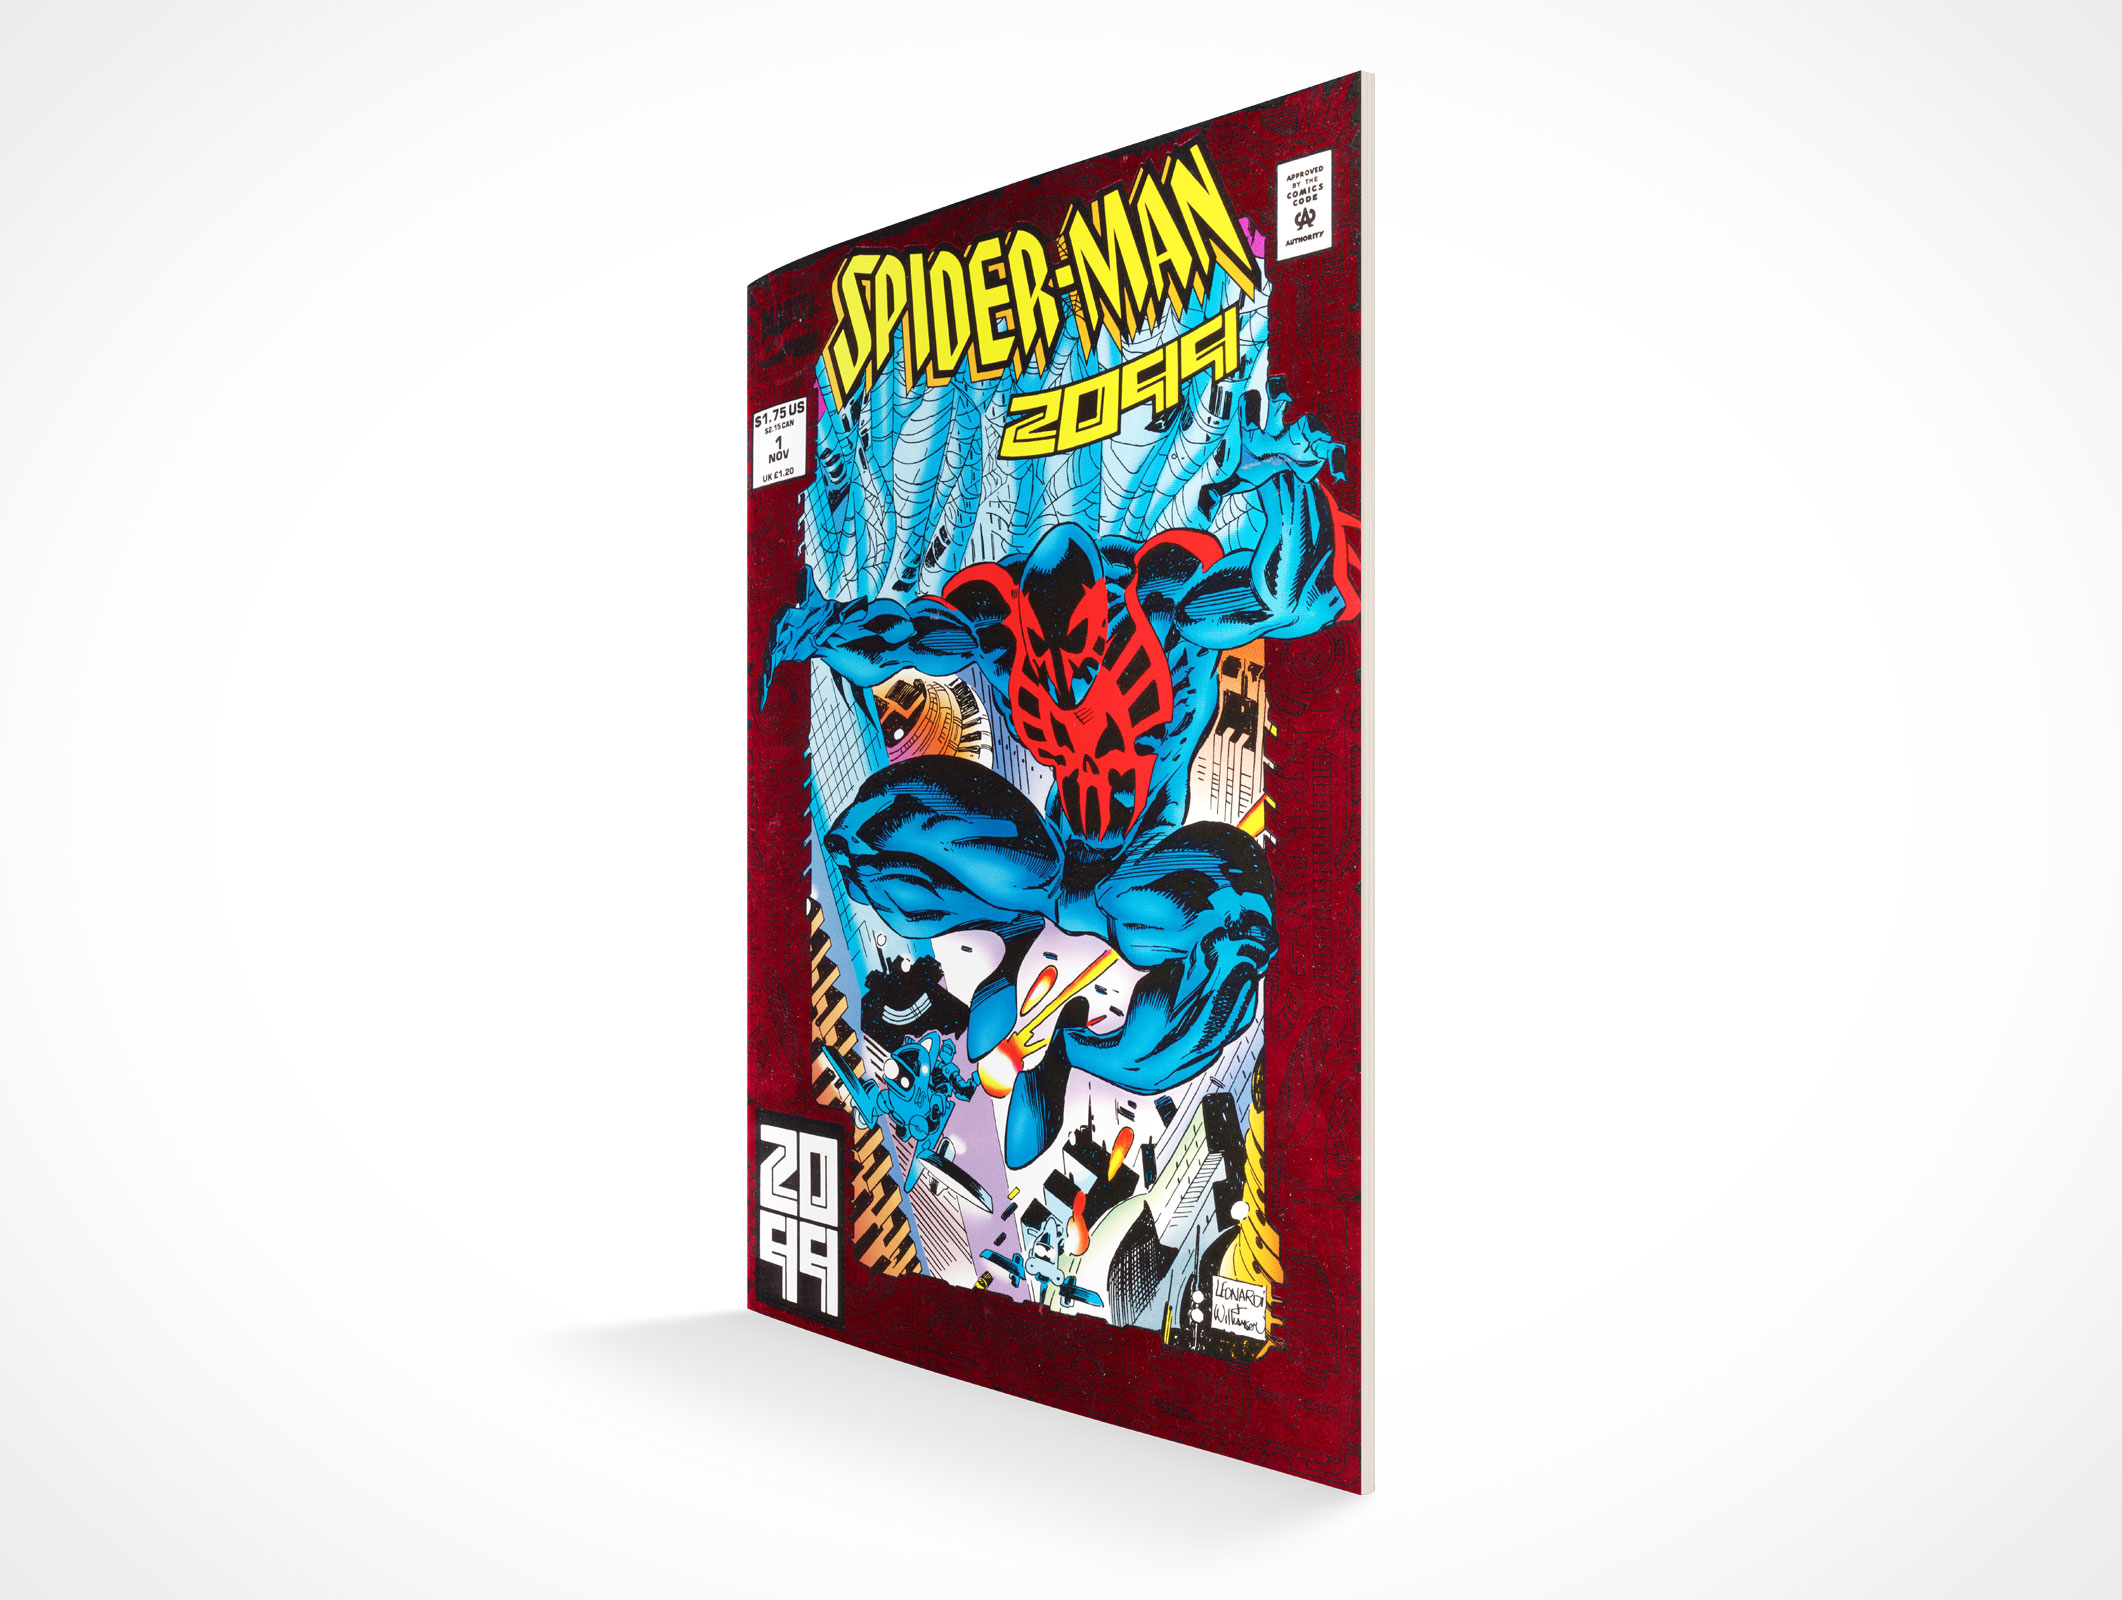 Download Comic Book And Graphic Novel Mockup